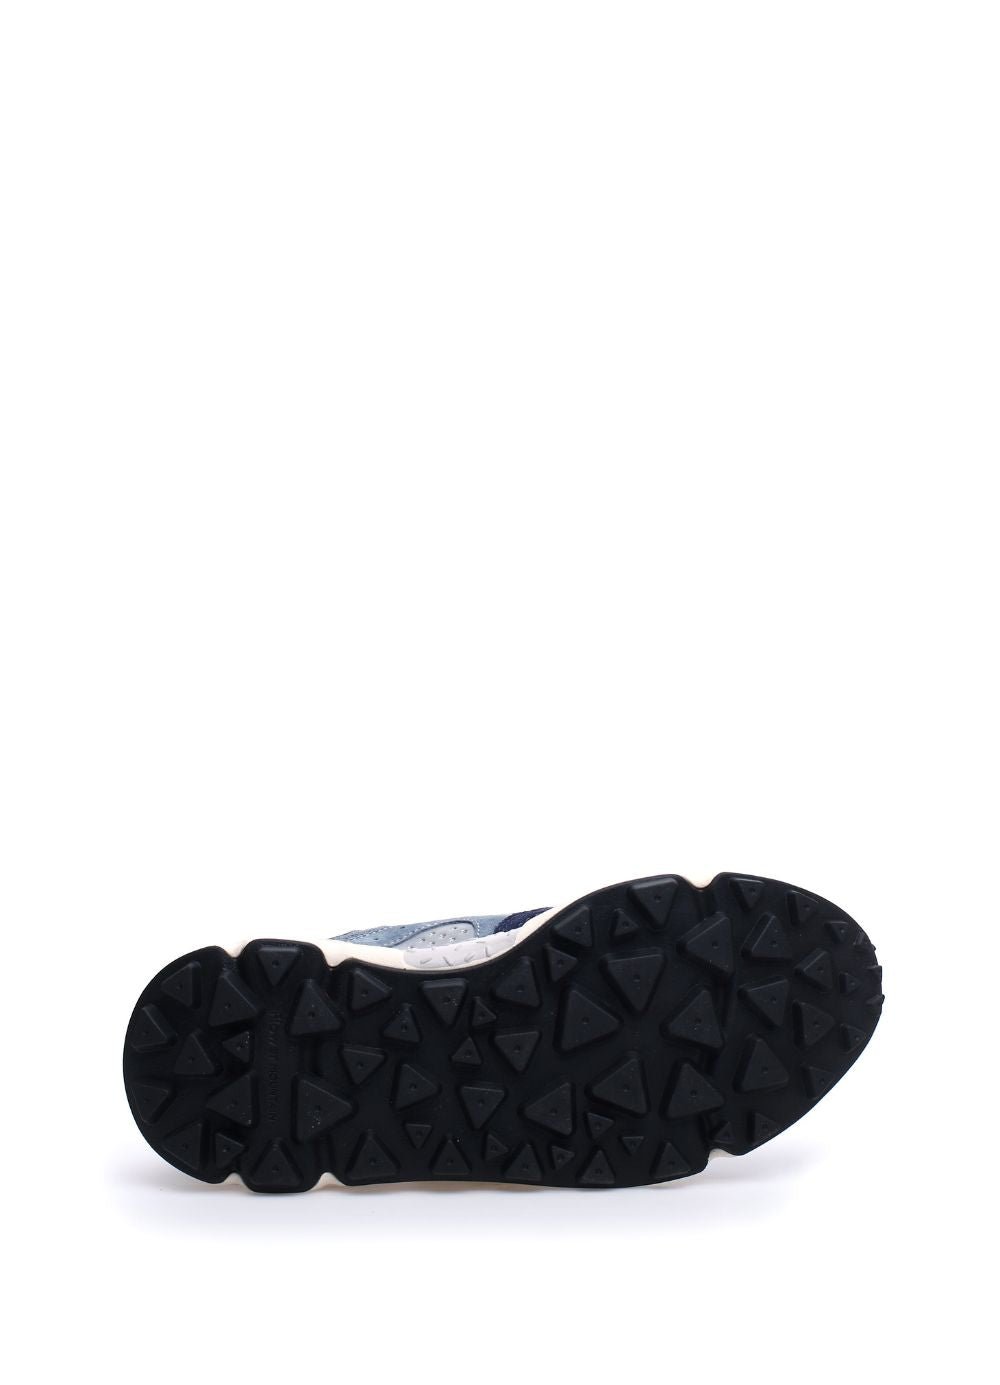 FLOWER MOUNTAIN - YAMANO 3 | Suede & Canvas Sneaker | JP Print Navy/Black - HANSEN Garments